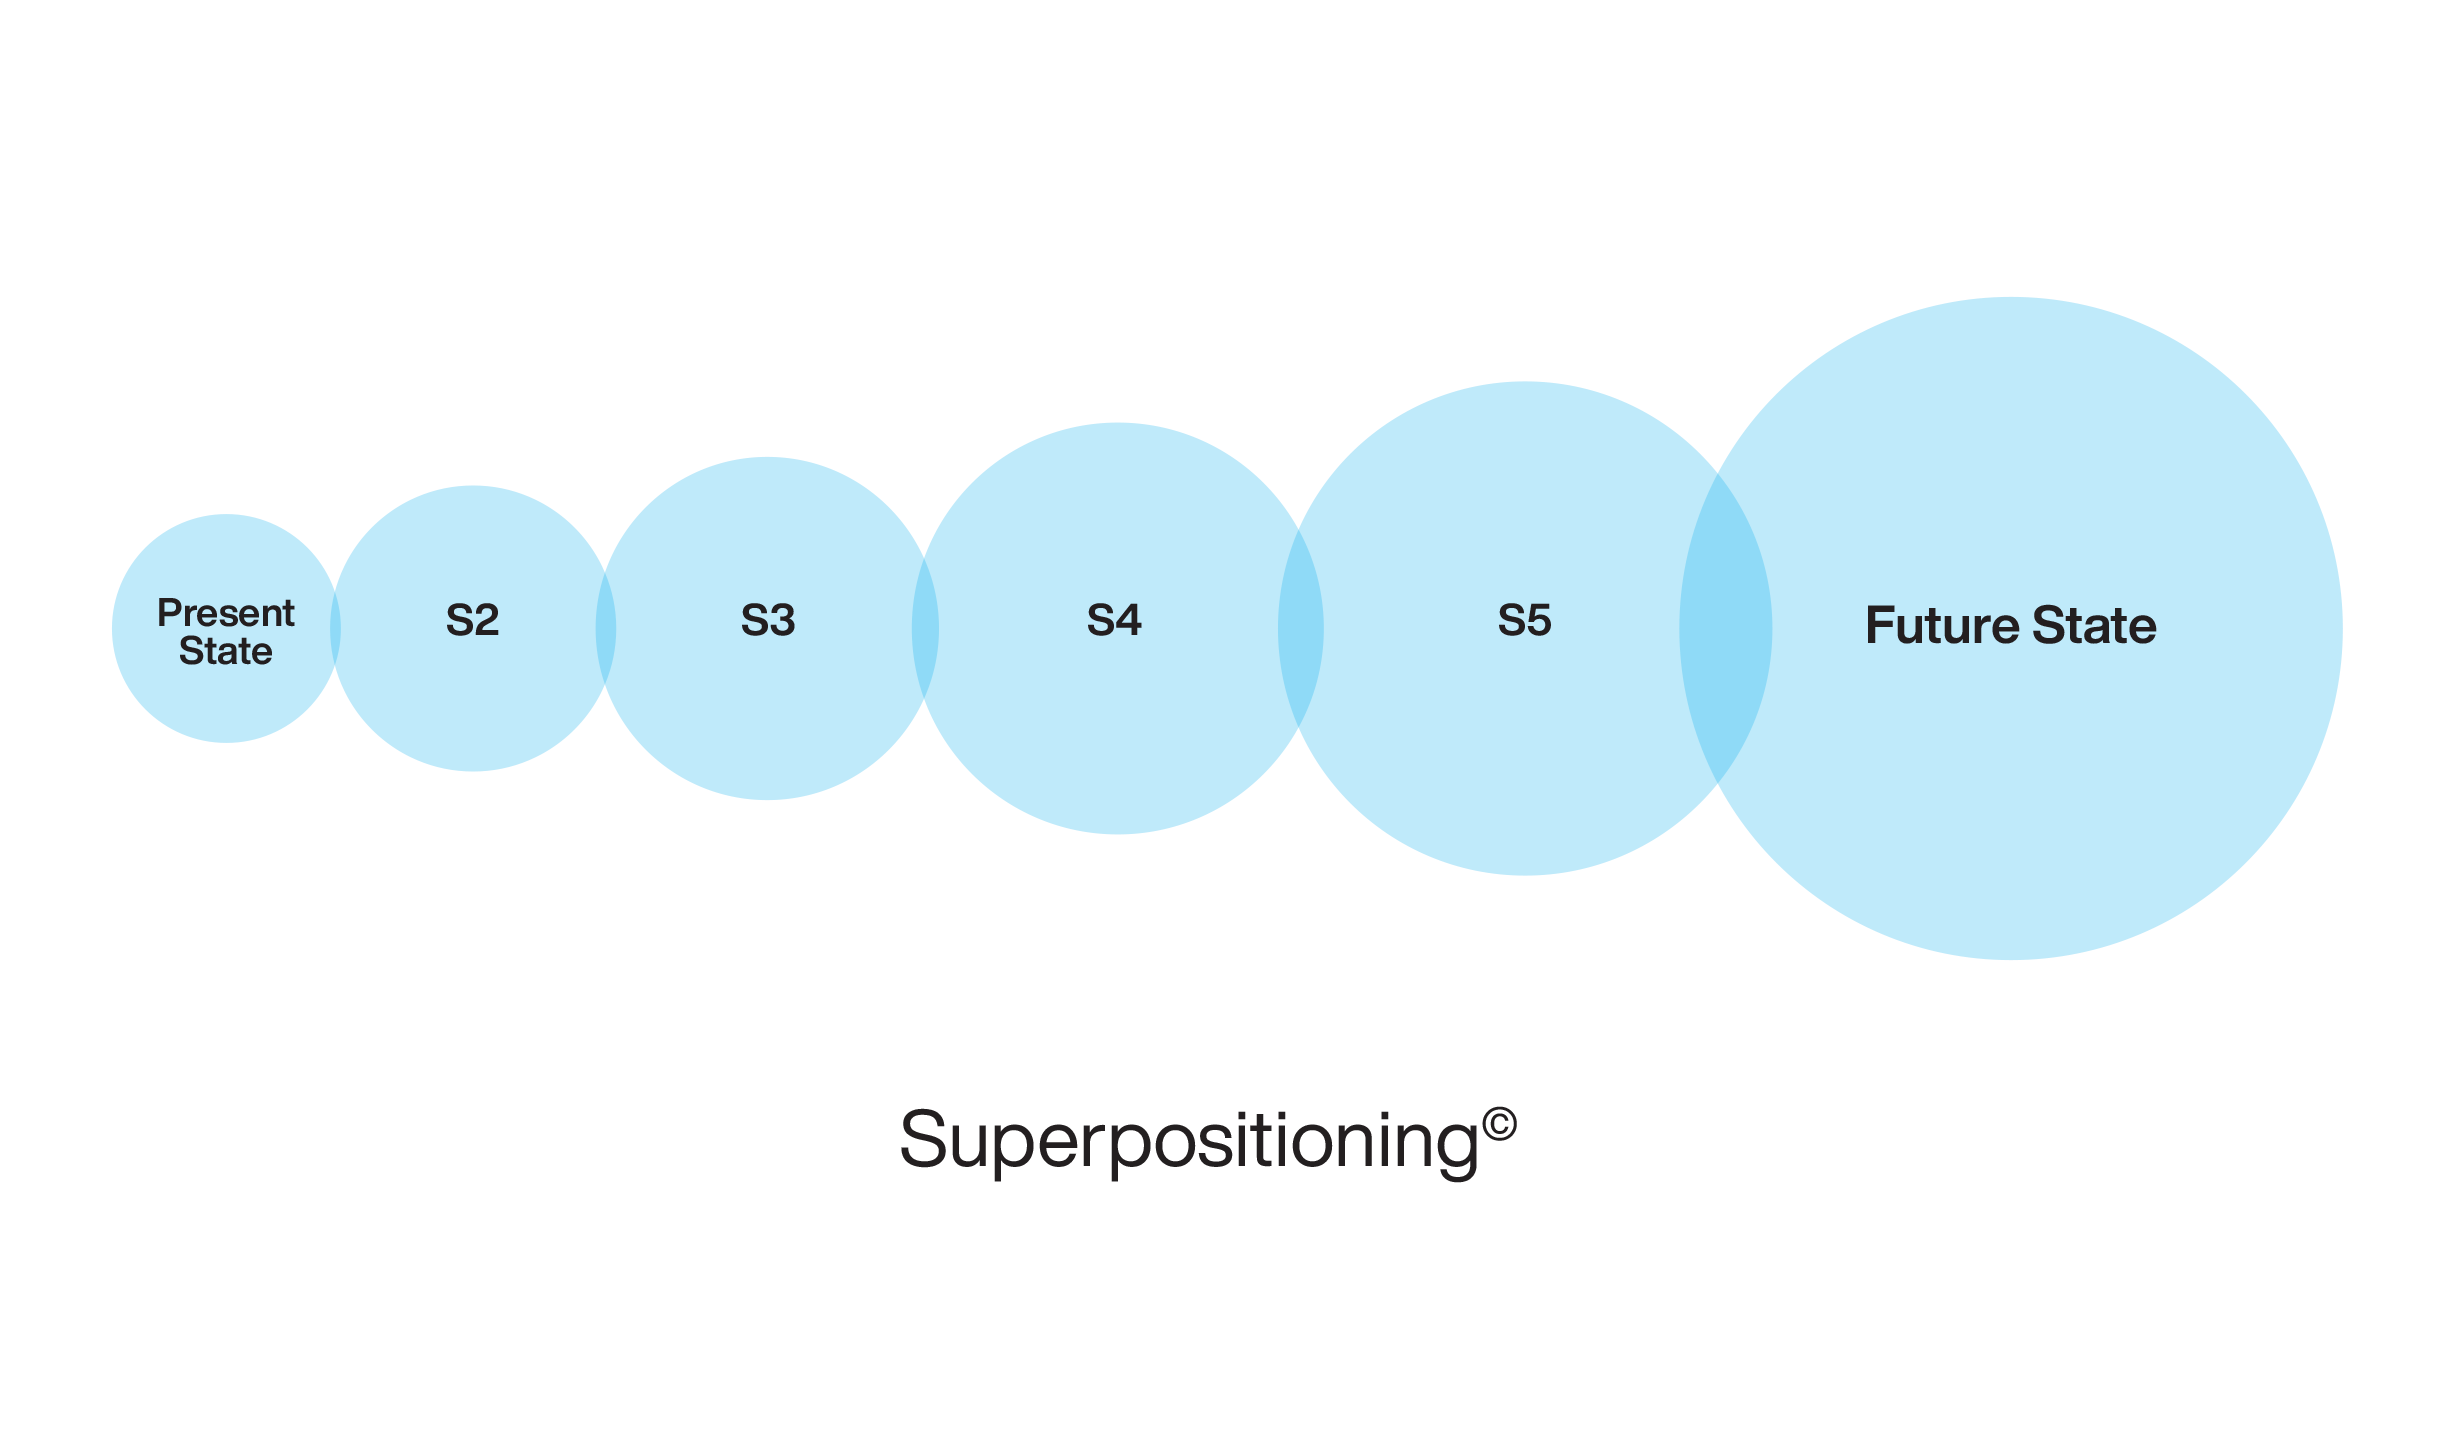 Superpositioning